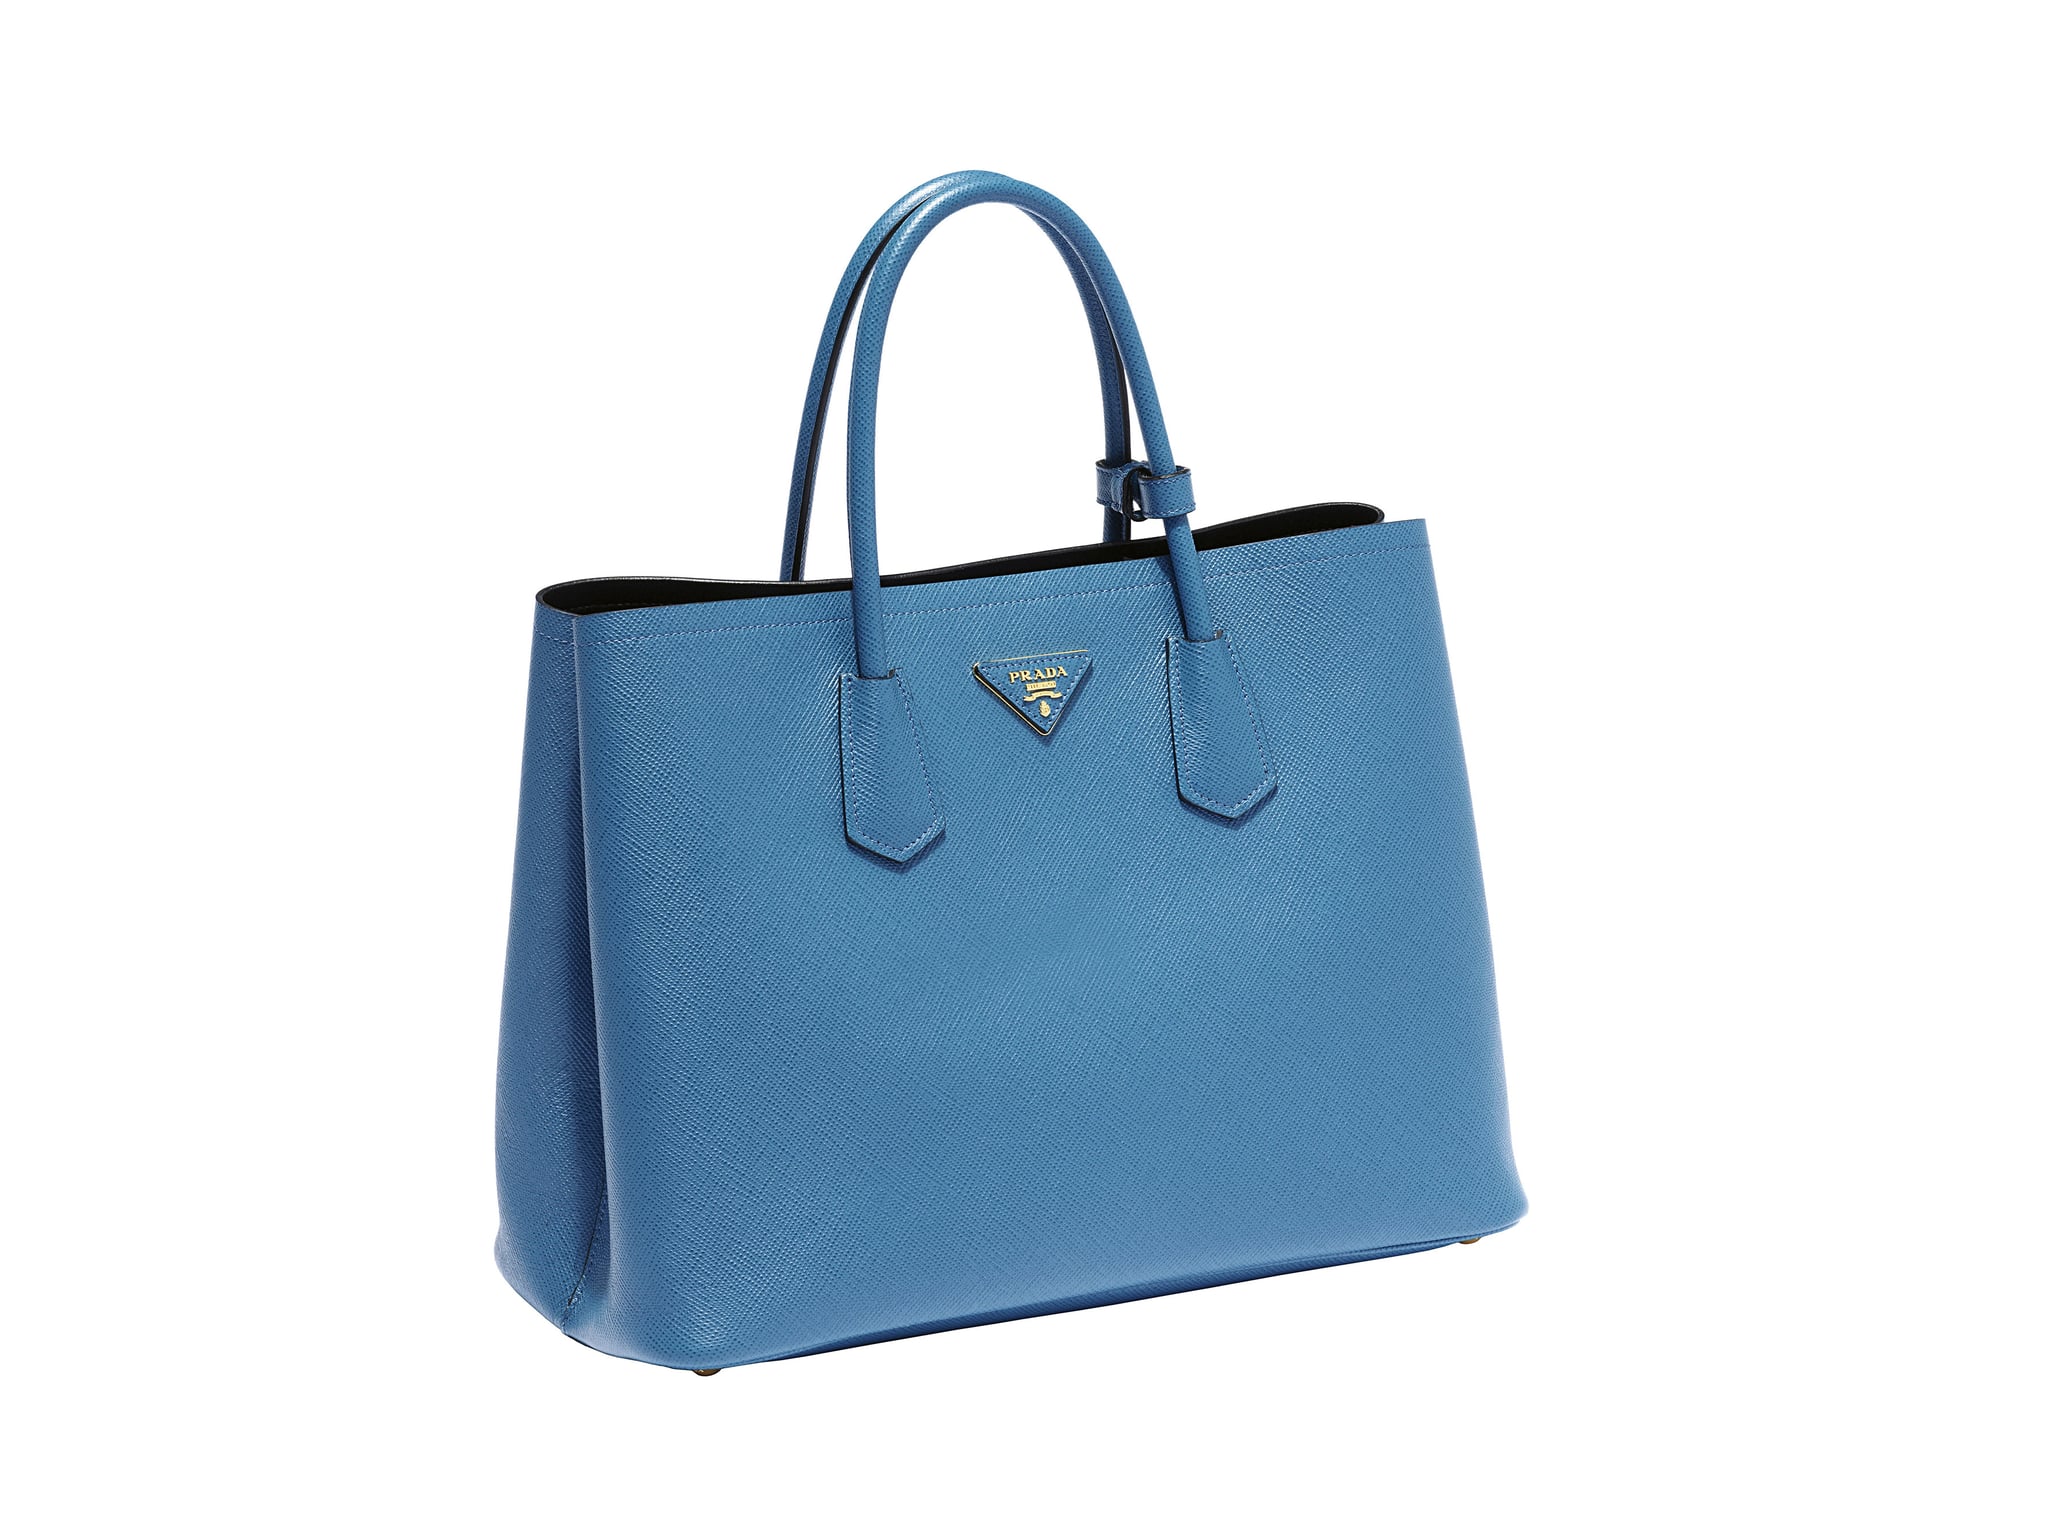 Prada Double Bag in Cobalto | We Are Doubling Down on the Brand-New Prada  Bag | POPSUGAR Fashion Photo 11